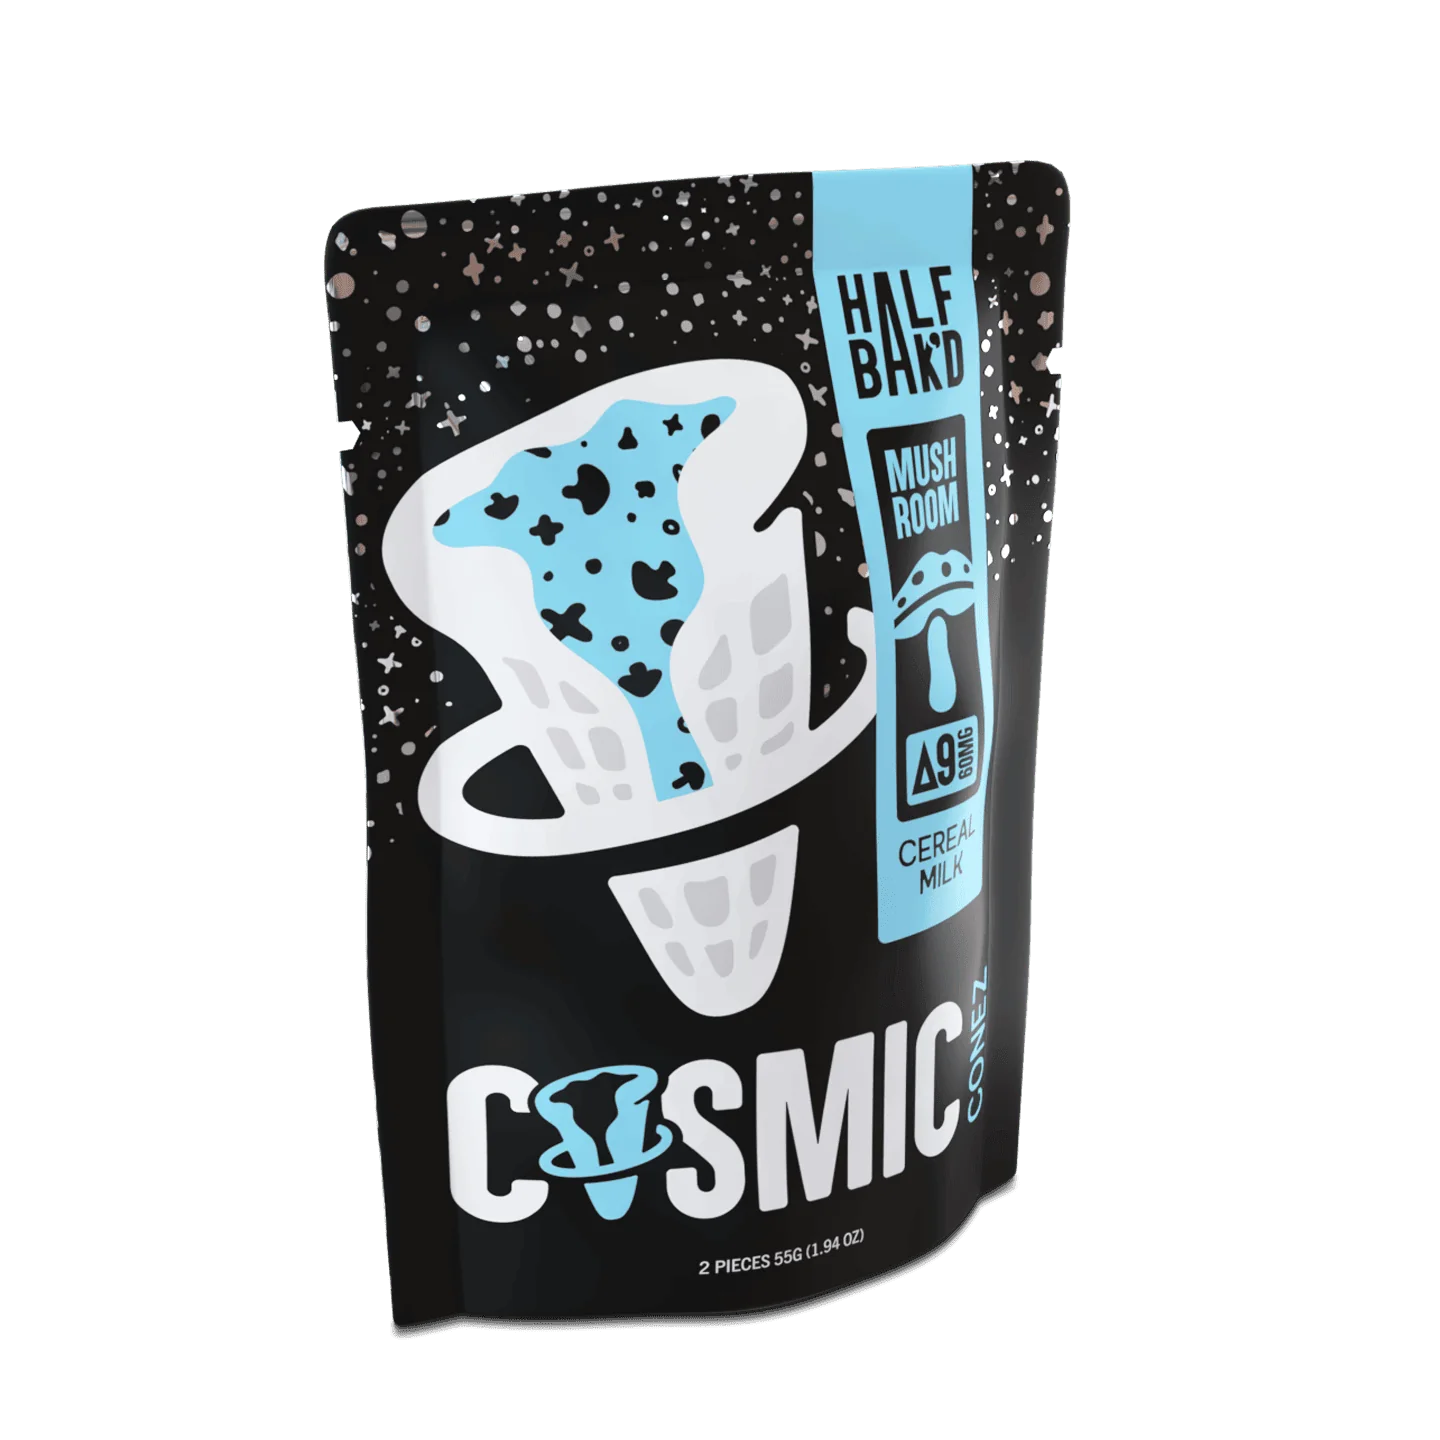 Half Bak'd Cosmic Conez Mushroom 60mg 2ct - Cereal Milk